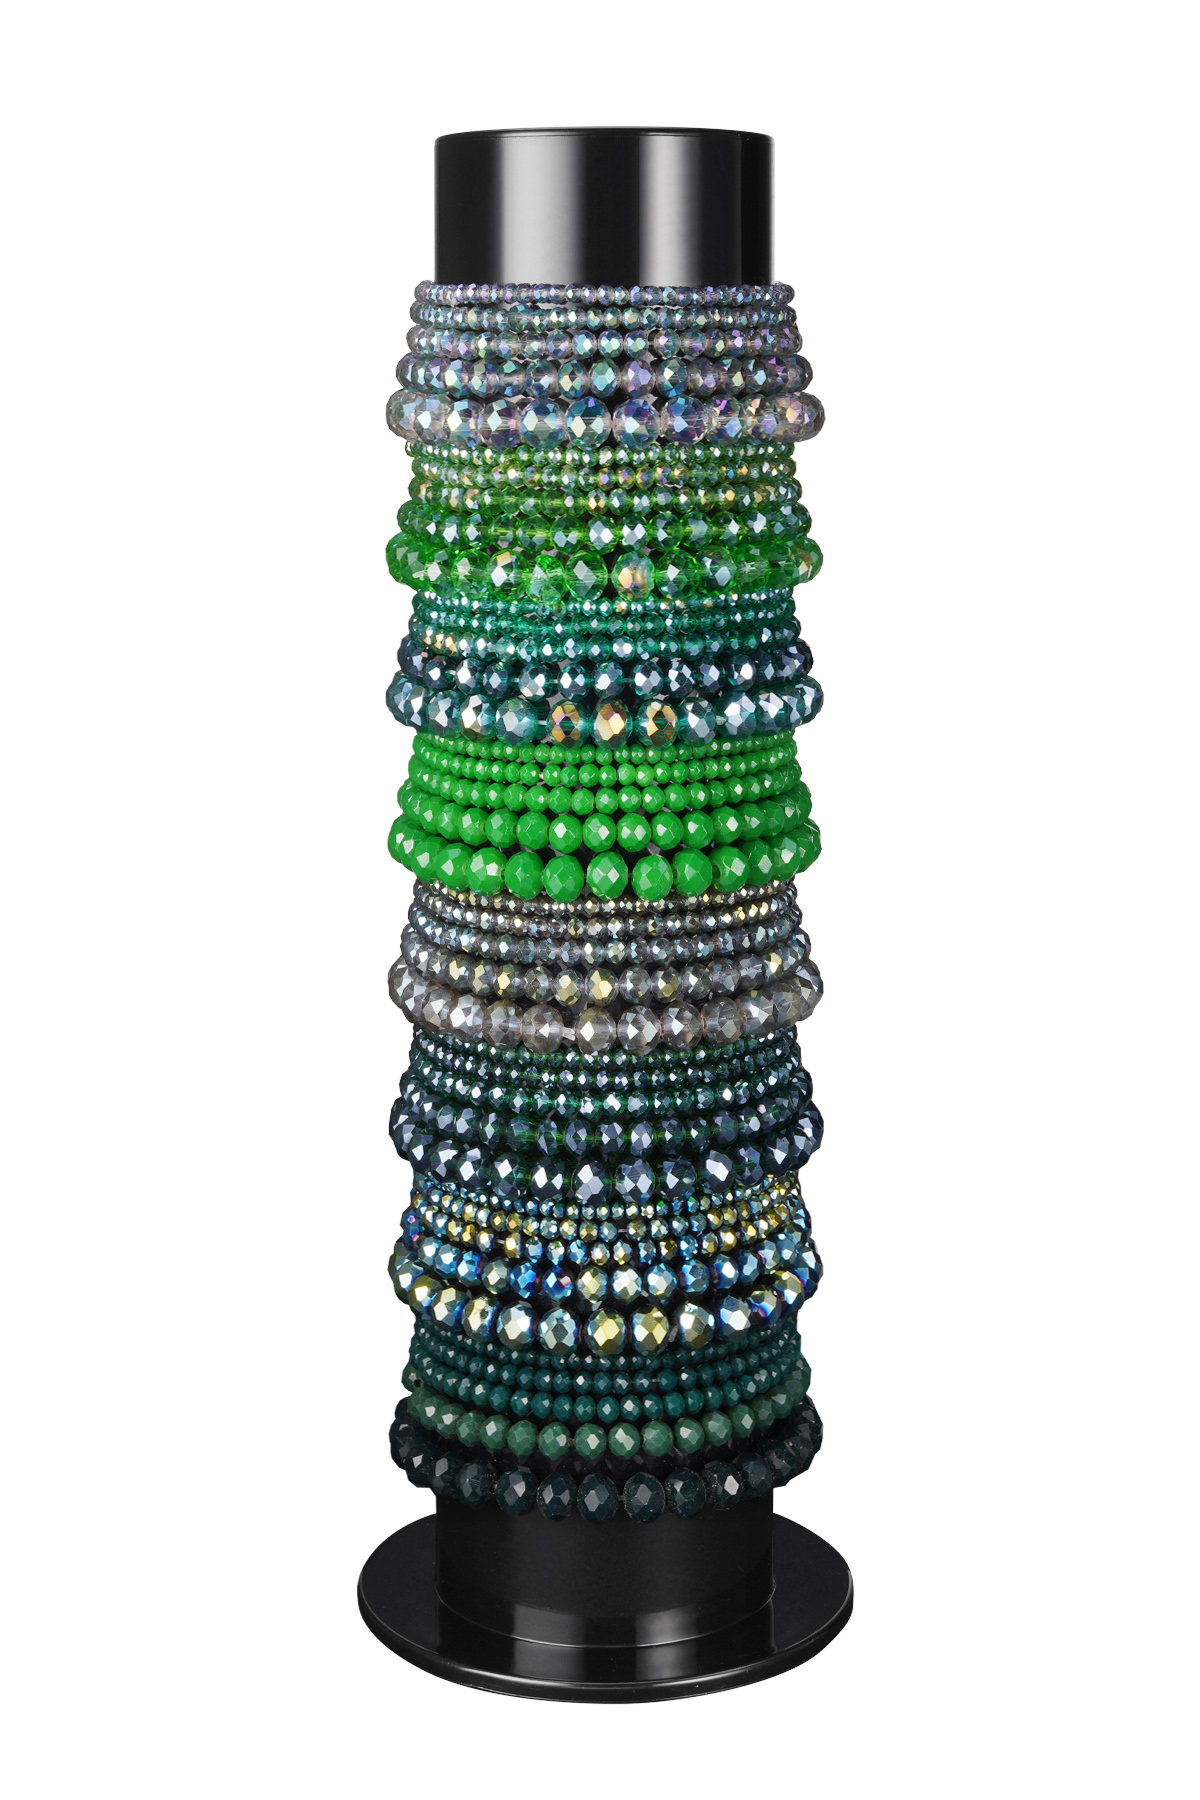 Set de 5 pulseras de cristal verde - oliva Imagen8